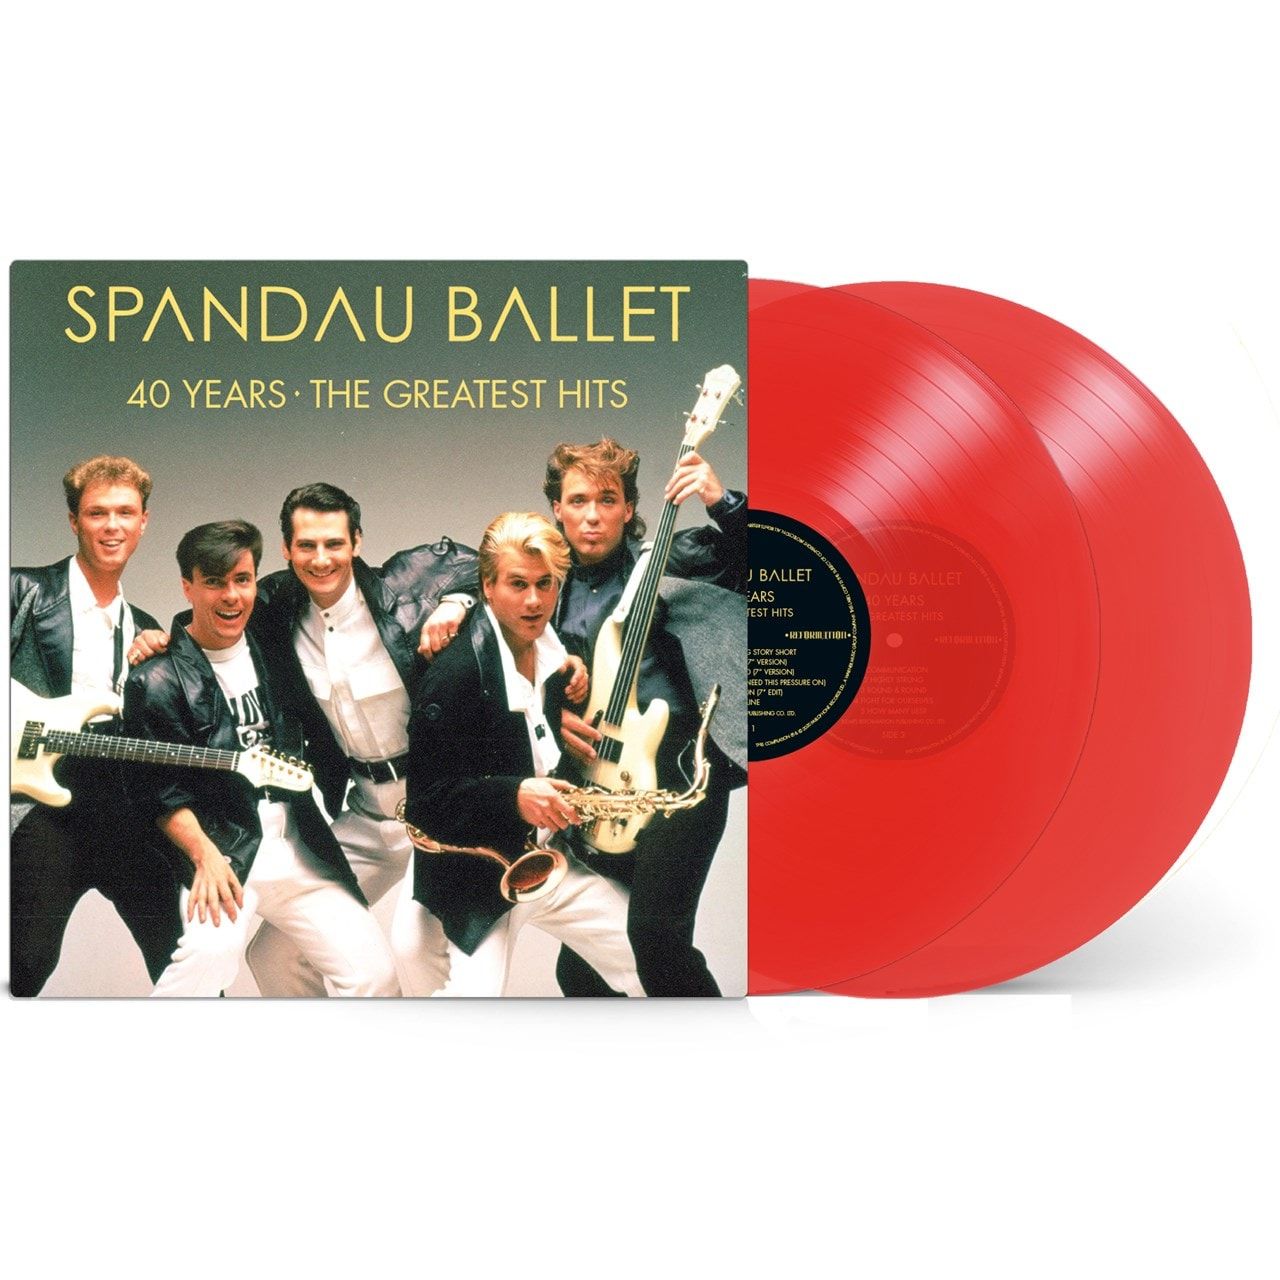 Spandau Ballet - 40 Years The Greatest Hits (2LP Red Vinyl)